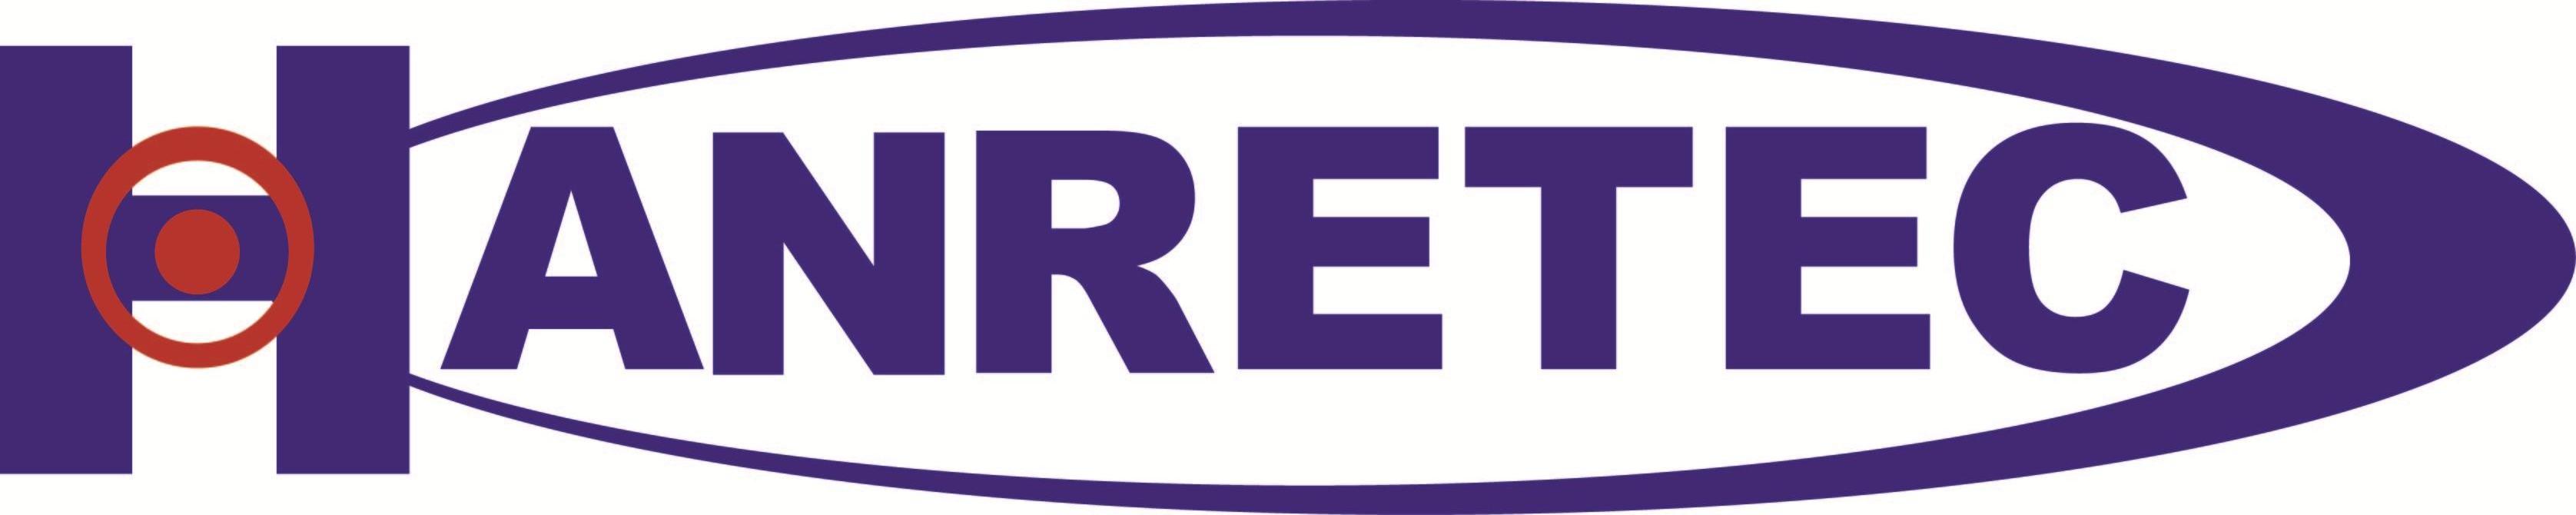  HANRETEC Enterprise Co., Ltd.-Logo